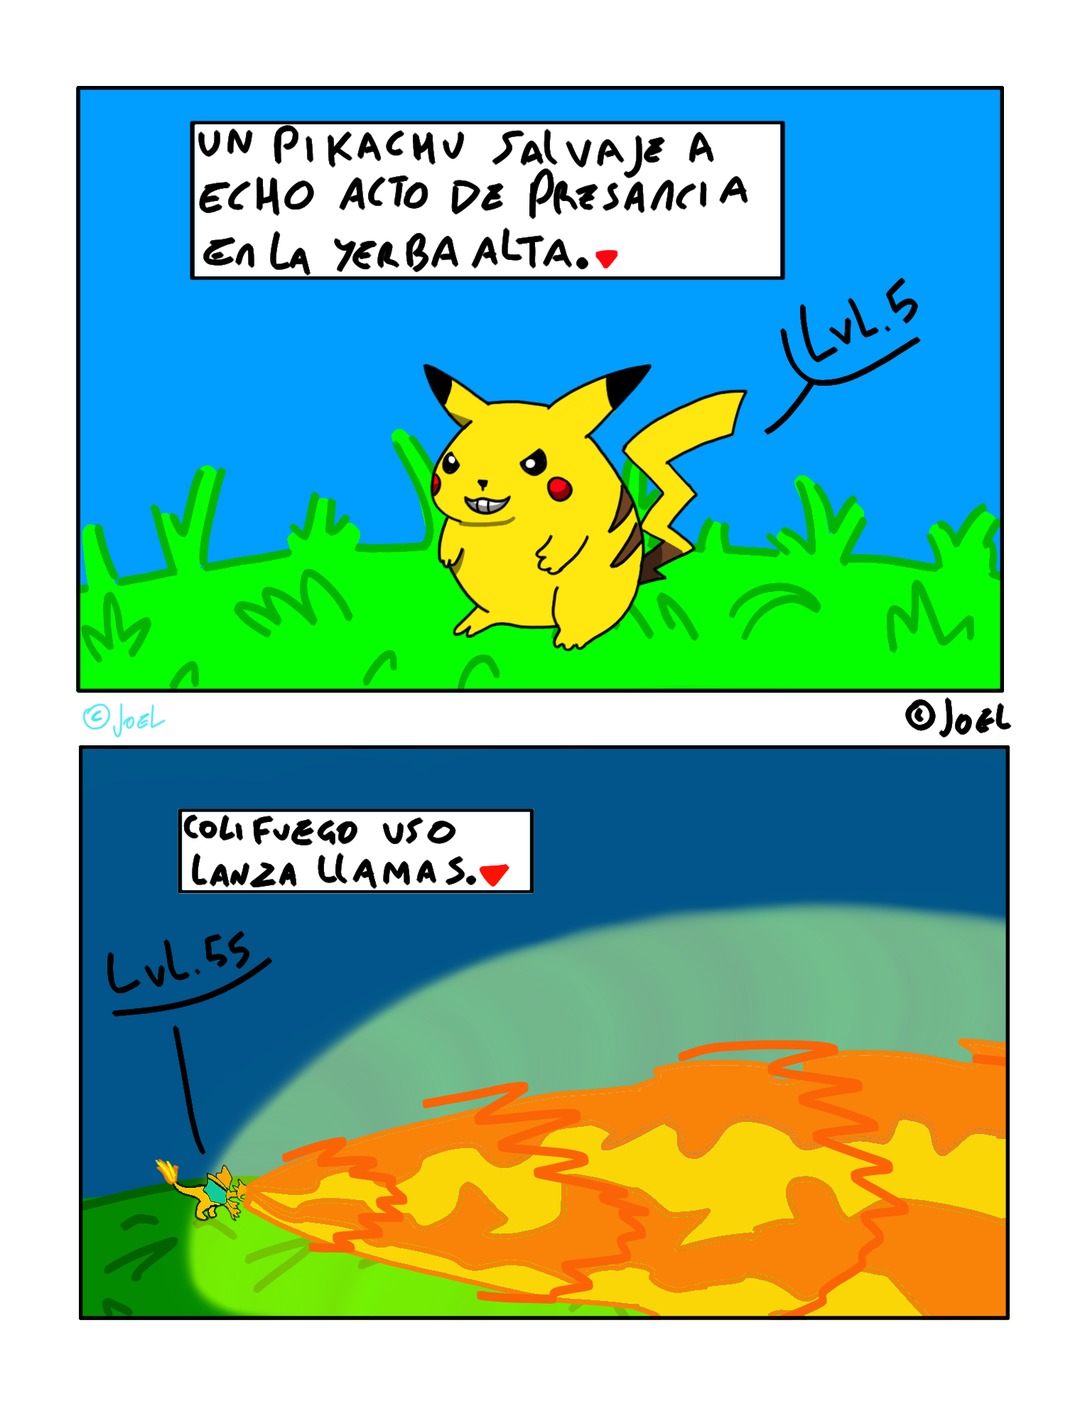 Pikachu salvaje no puede continuar - meme